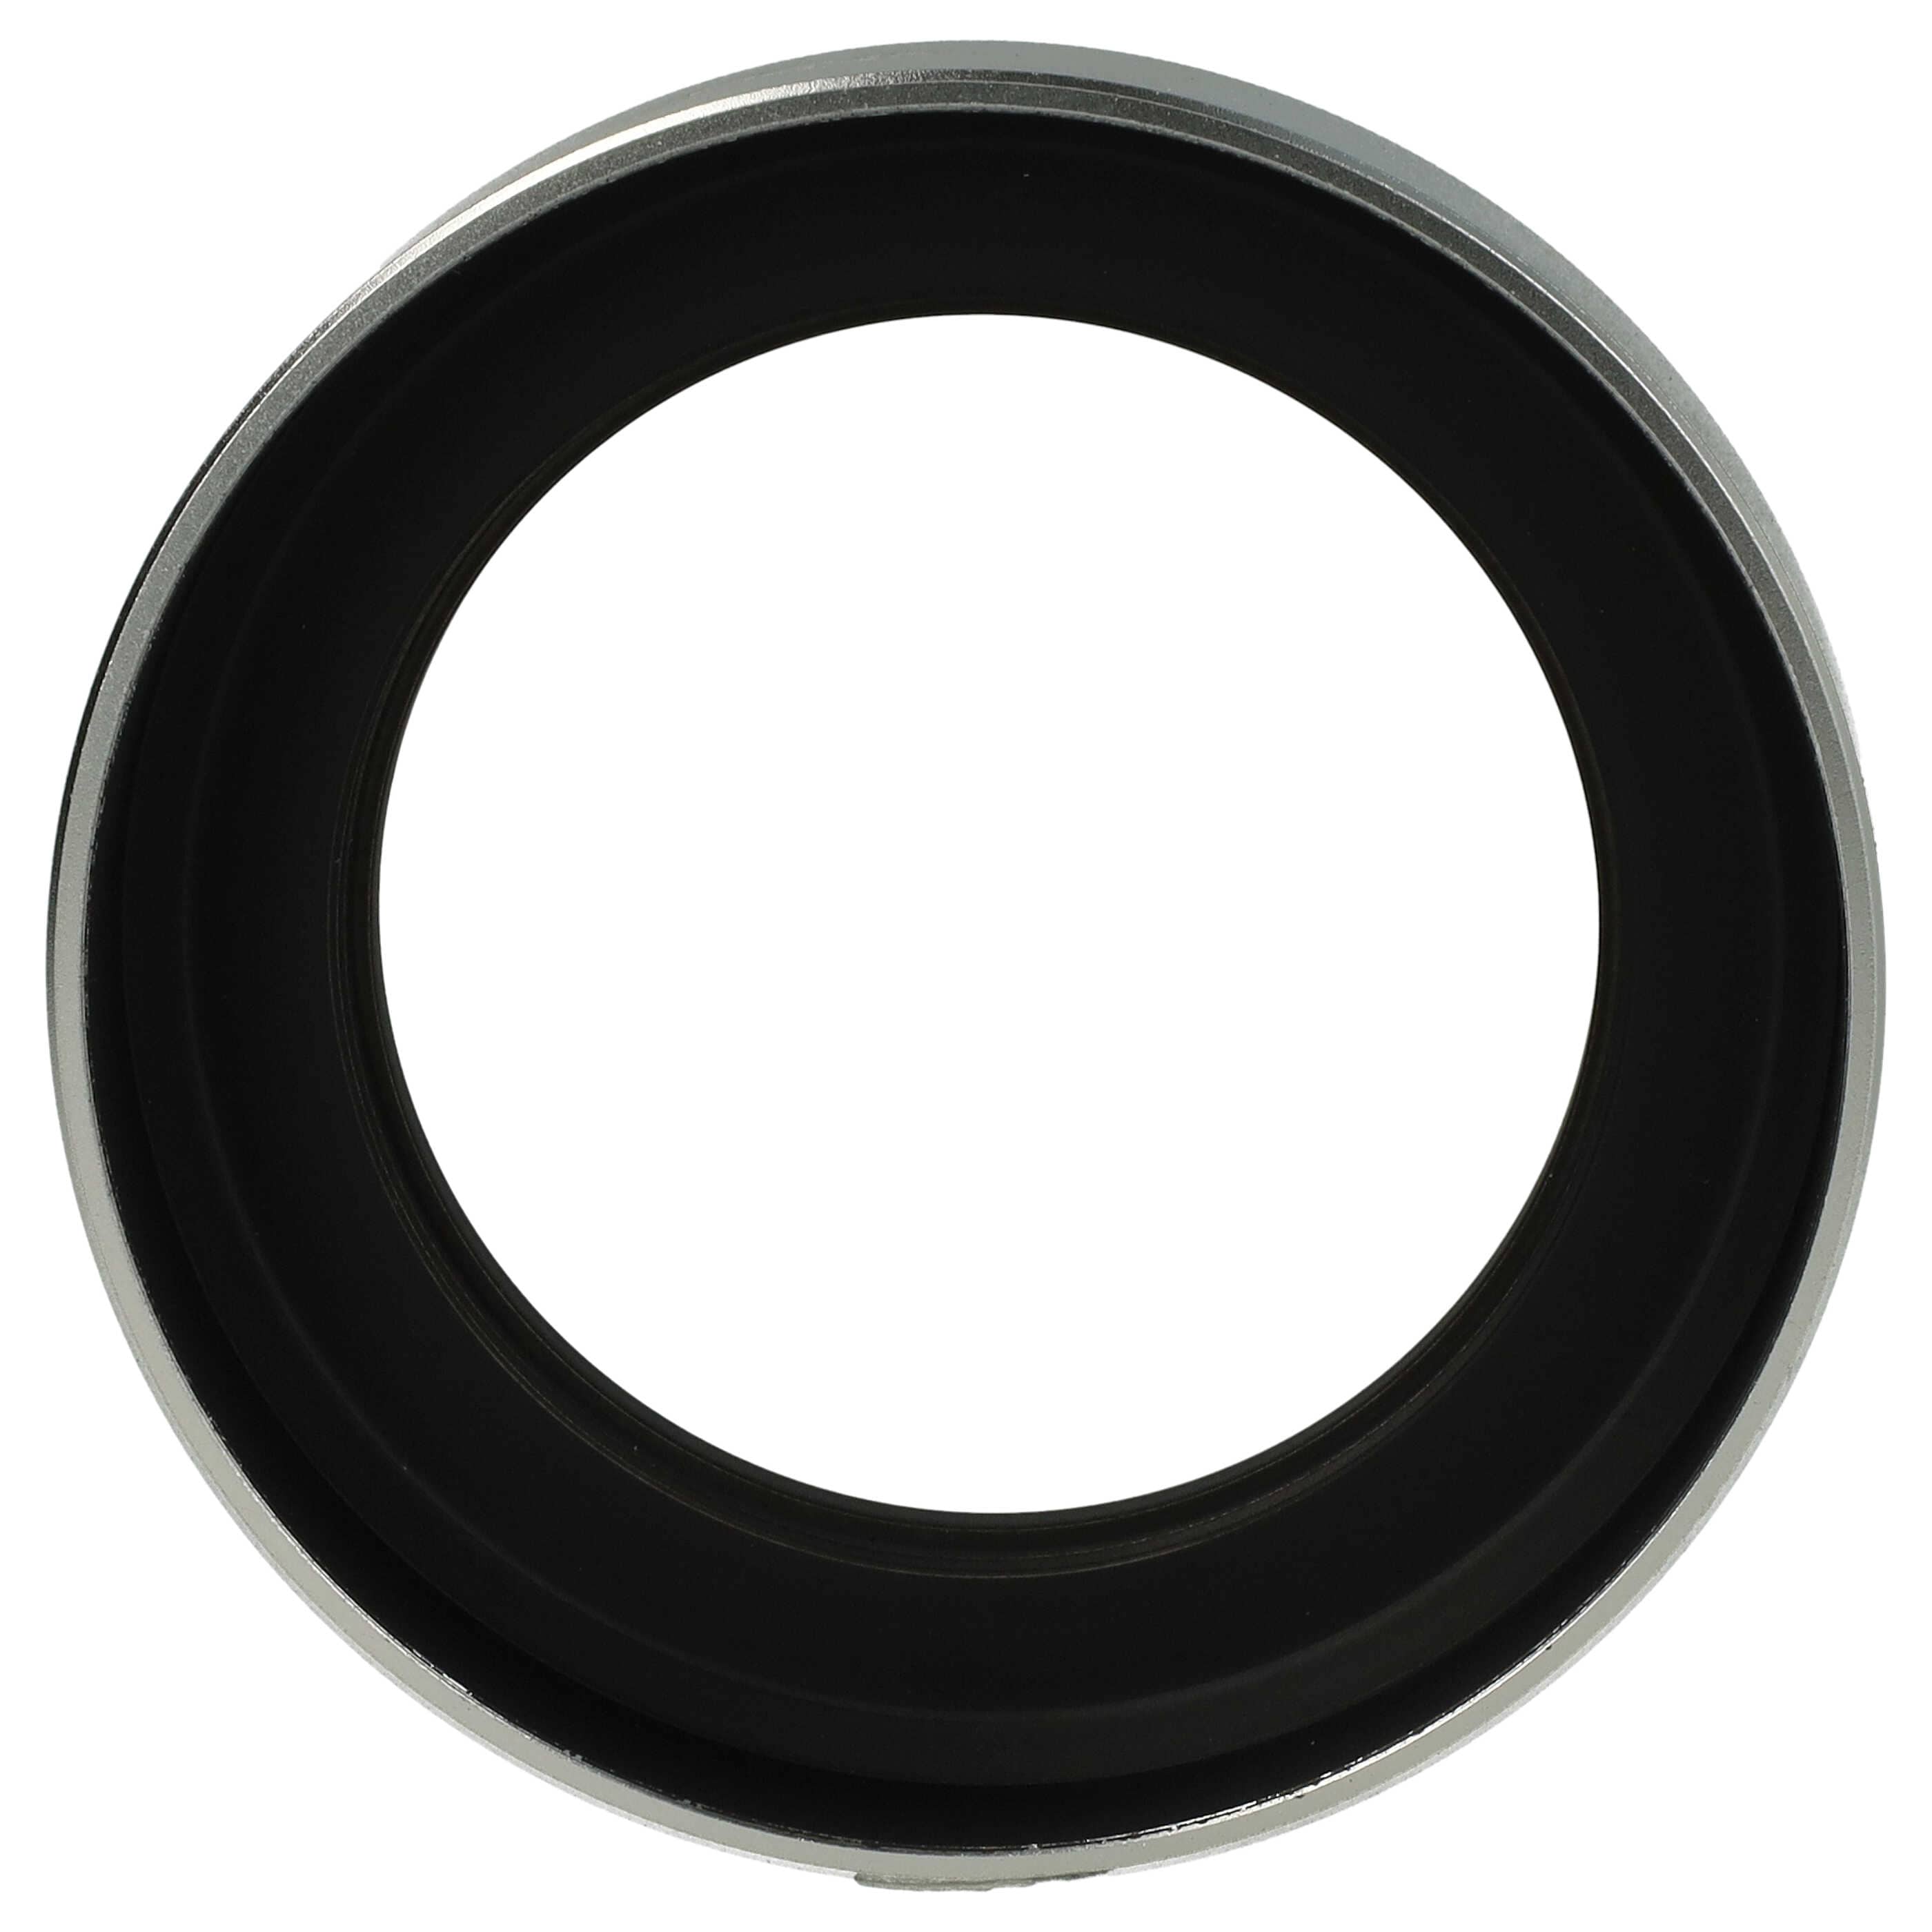 Lens Hood as Replacement for Nikon Lens HF-52